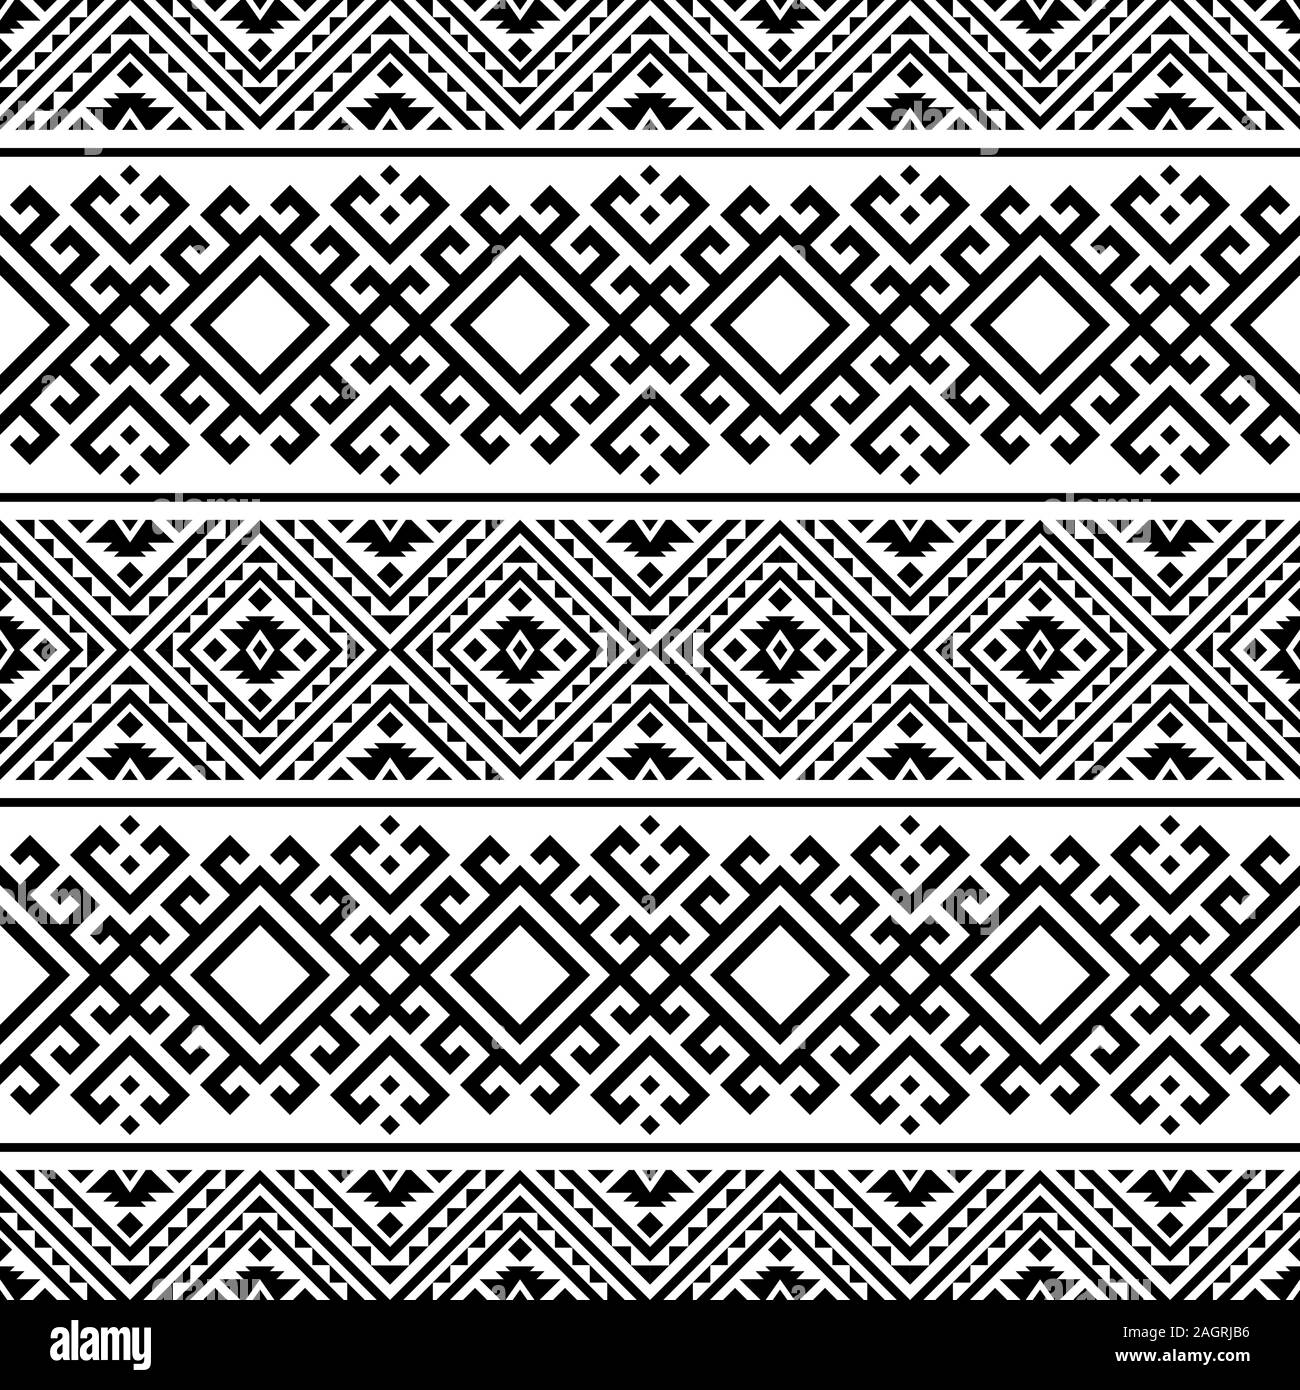 aztec tribal print wallpapers